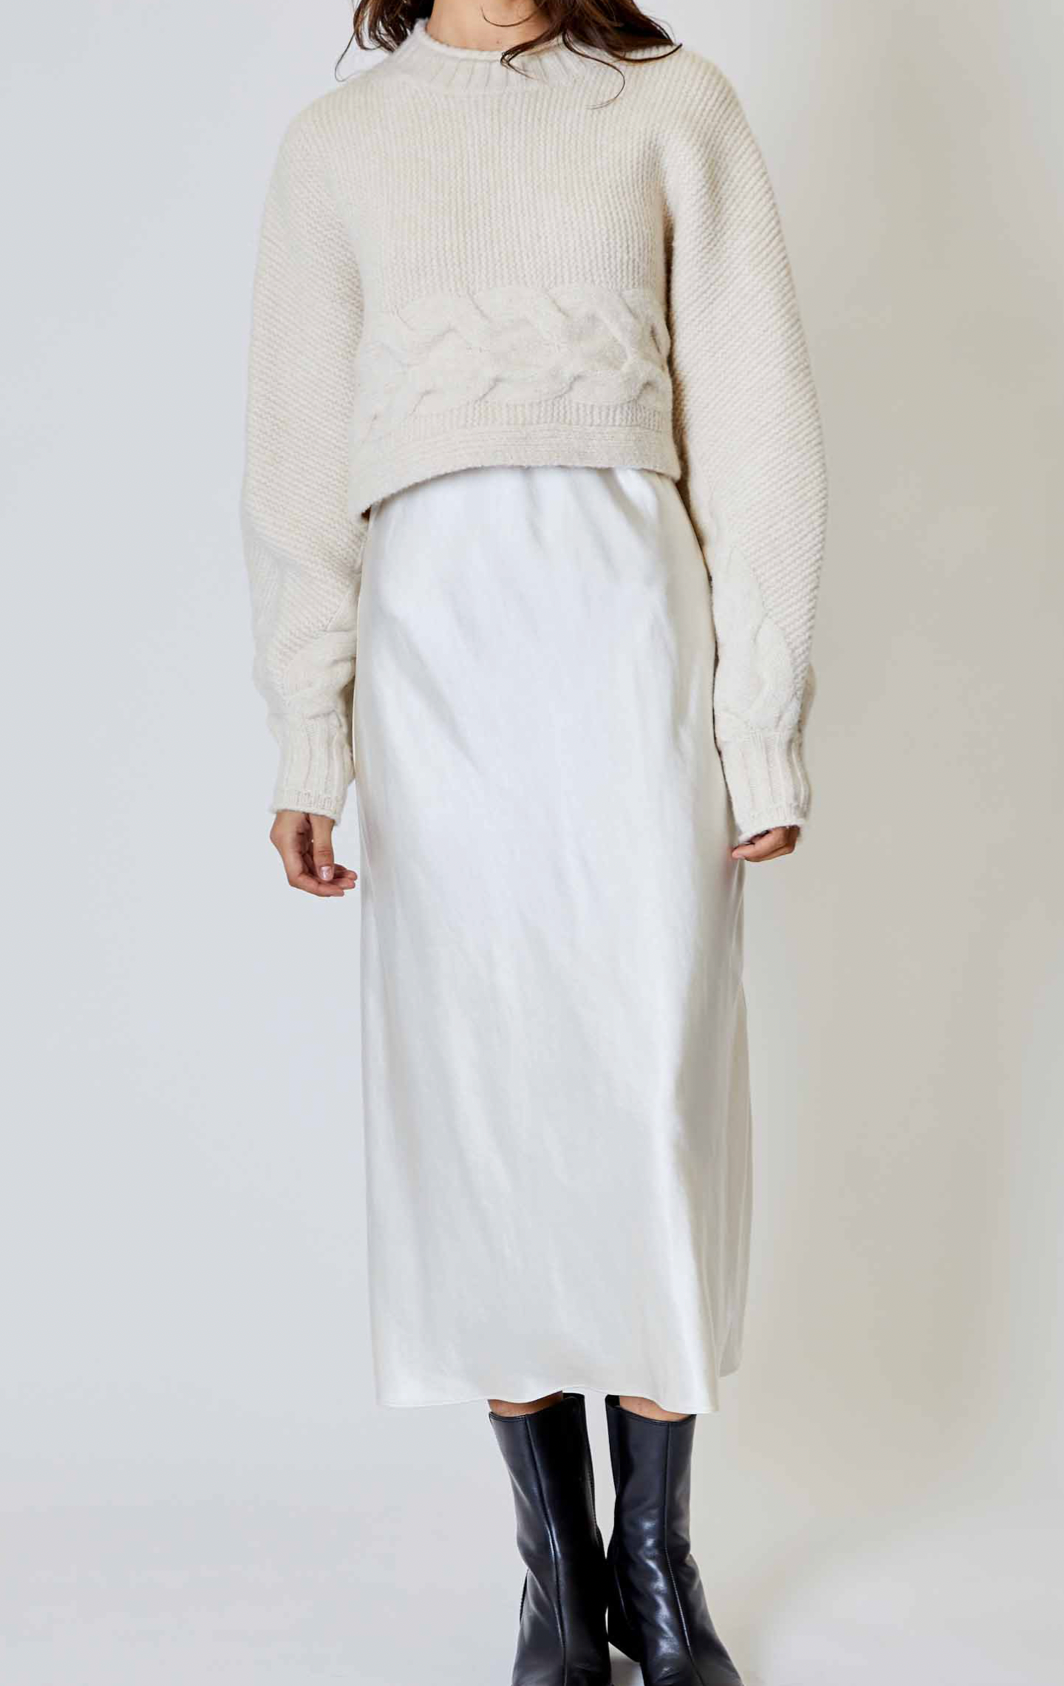 DH Ann Sweater Dress in ivory